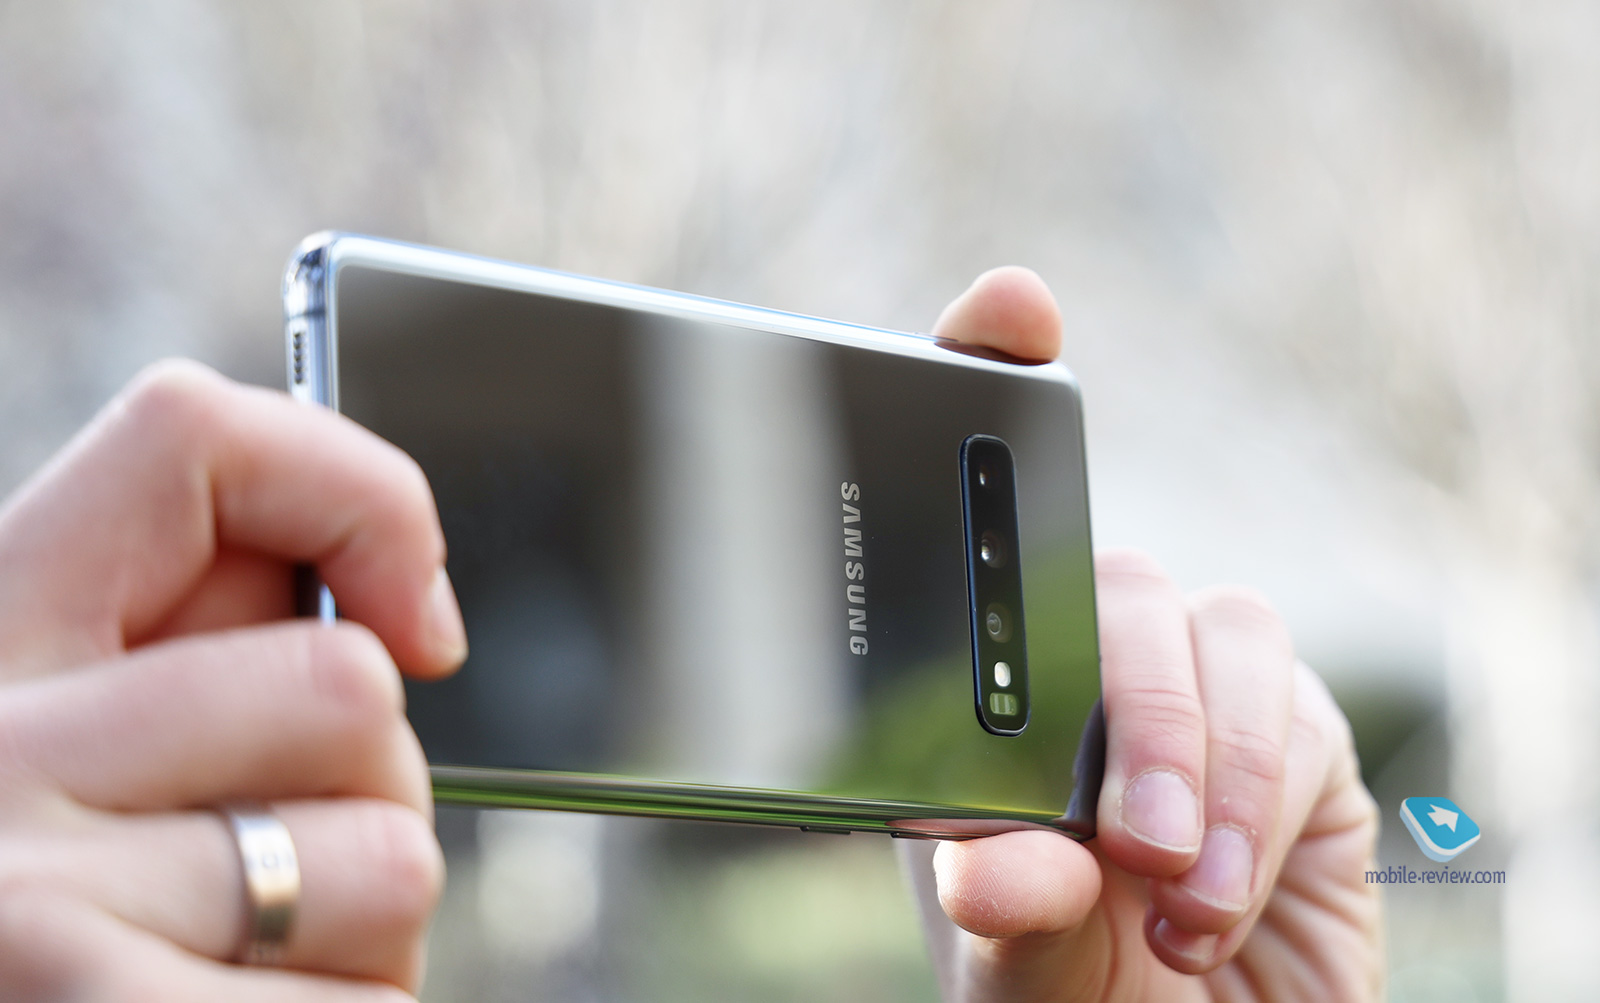 Samsung Galaxy S10/S10+ (SM-G970F/G975F)